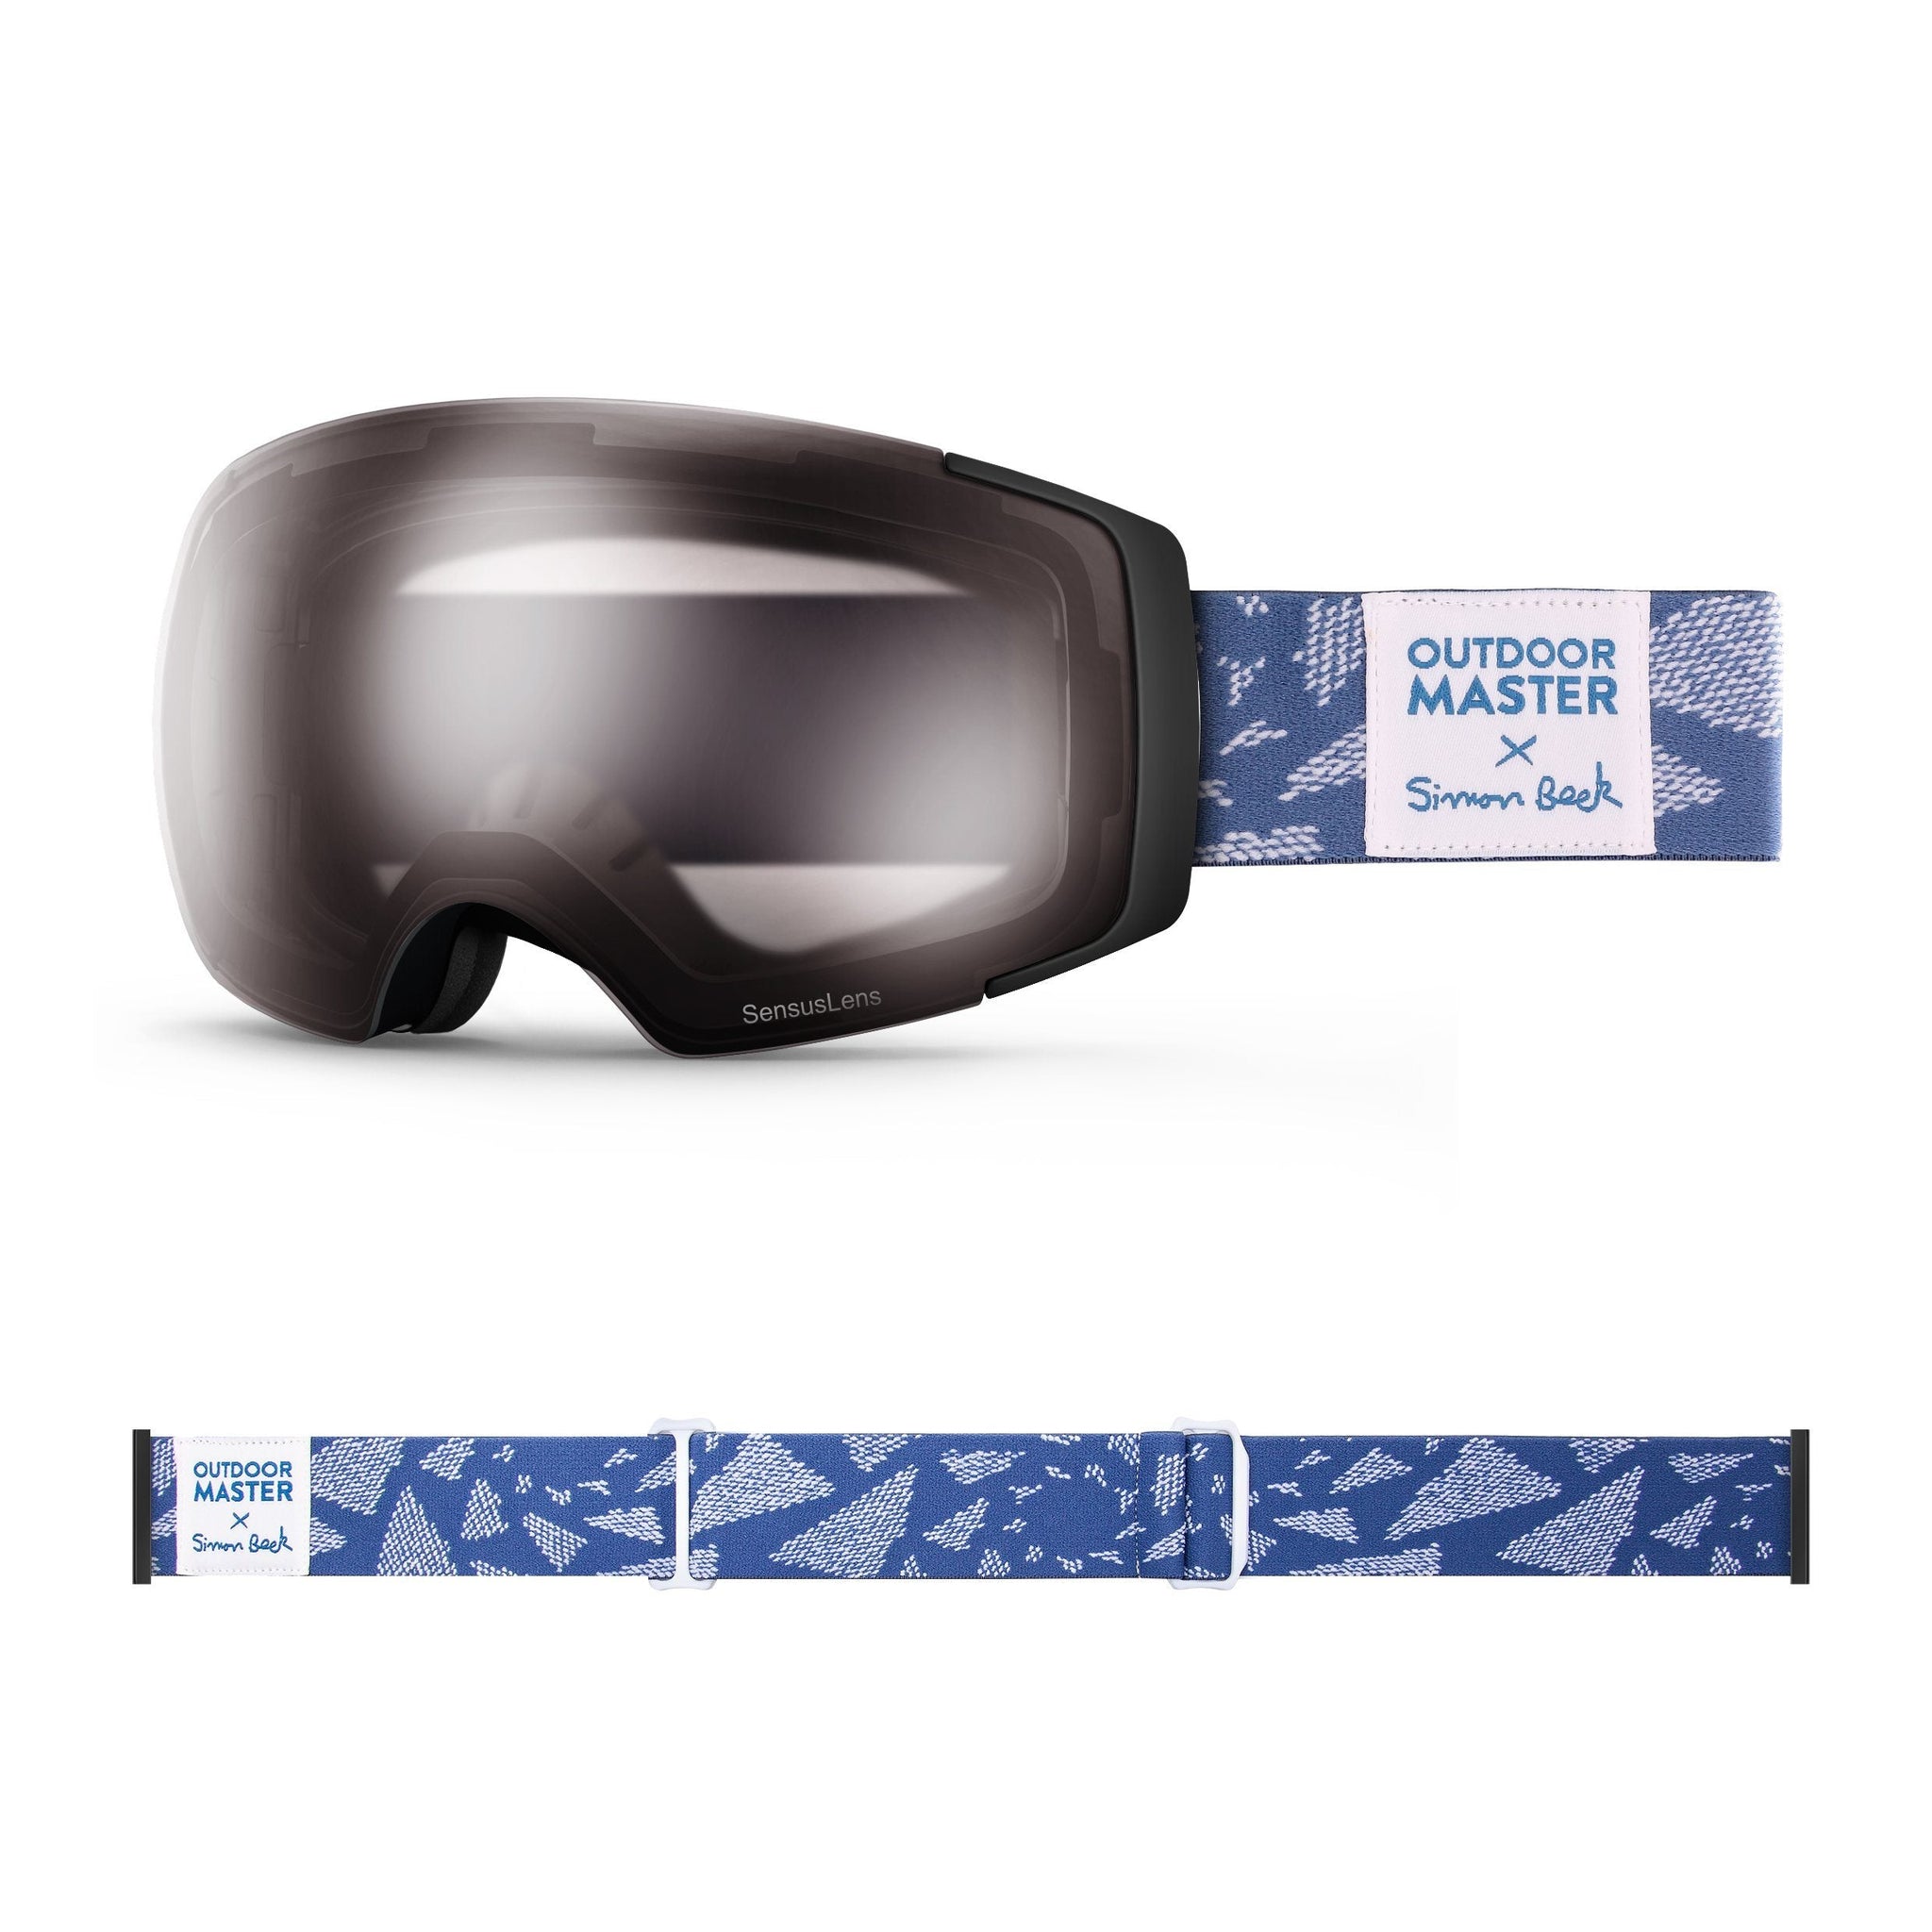 magnetic lens ski goggles